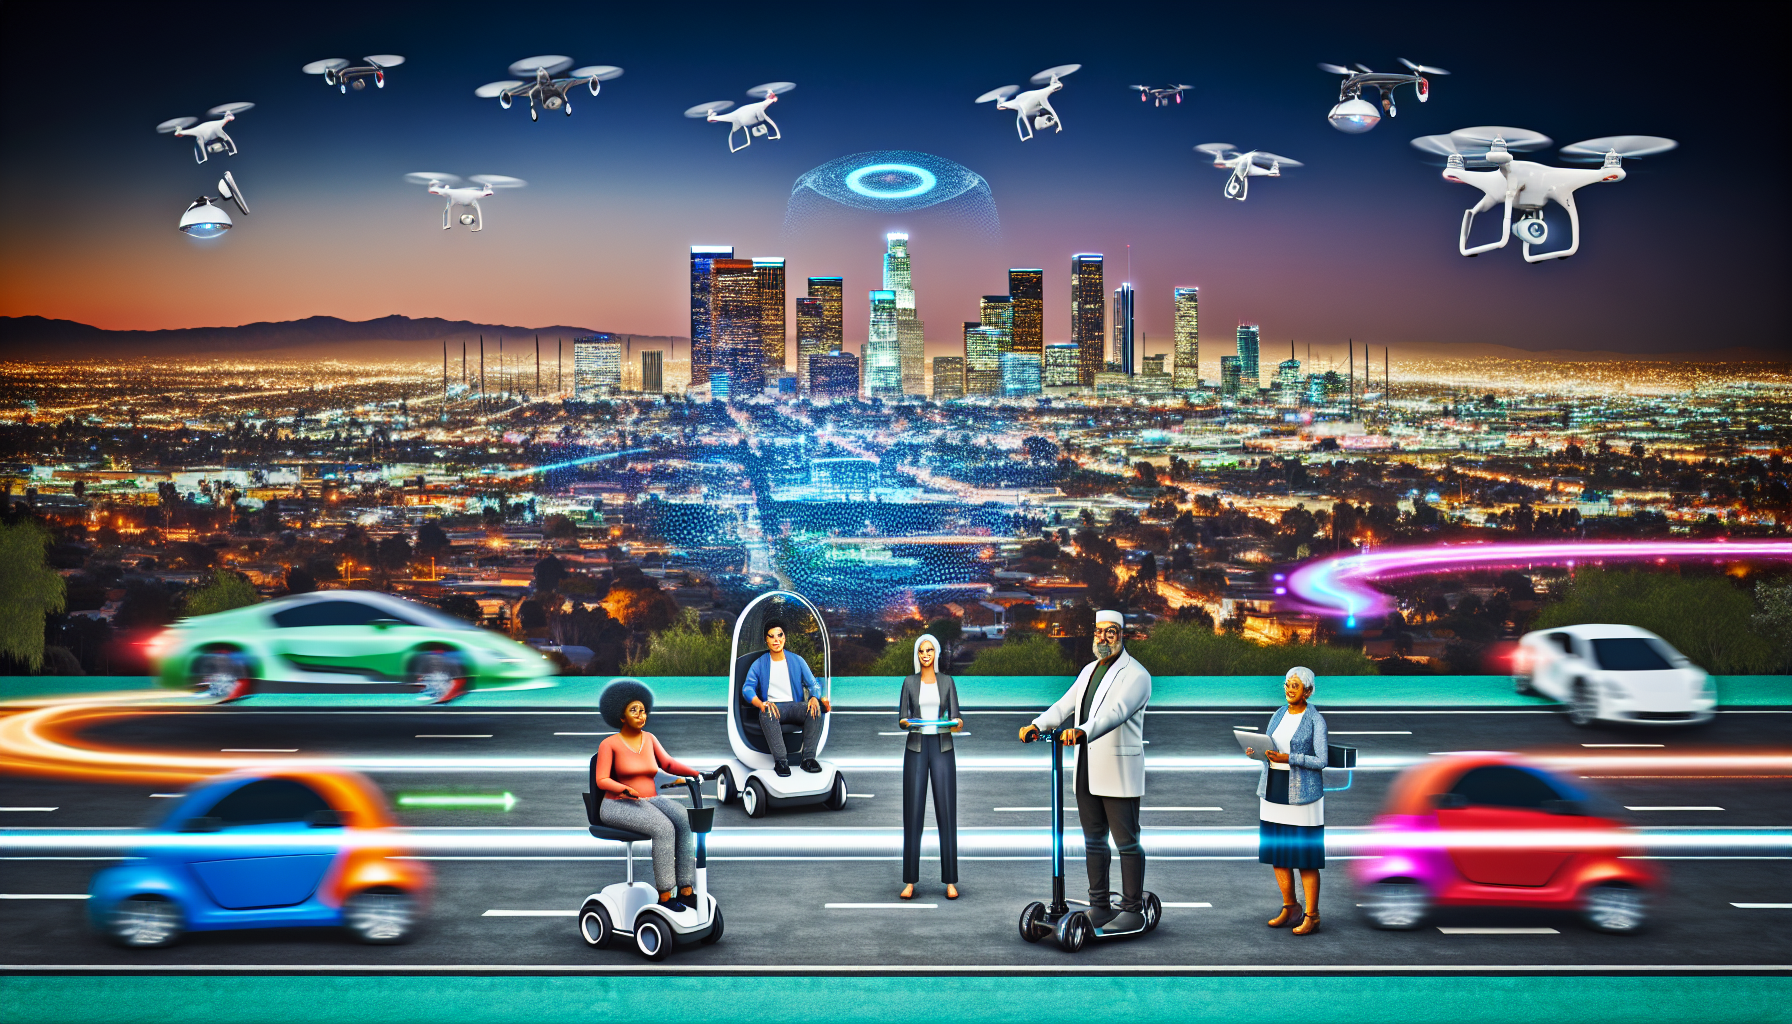 Los Angeles smart city concept